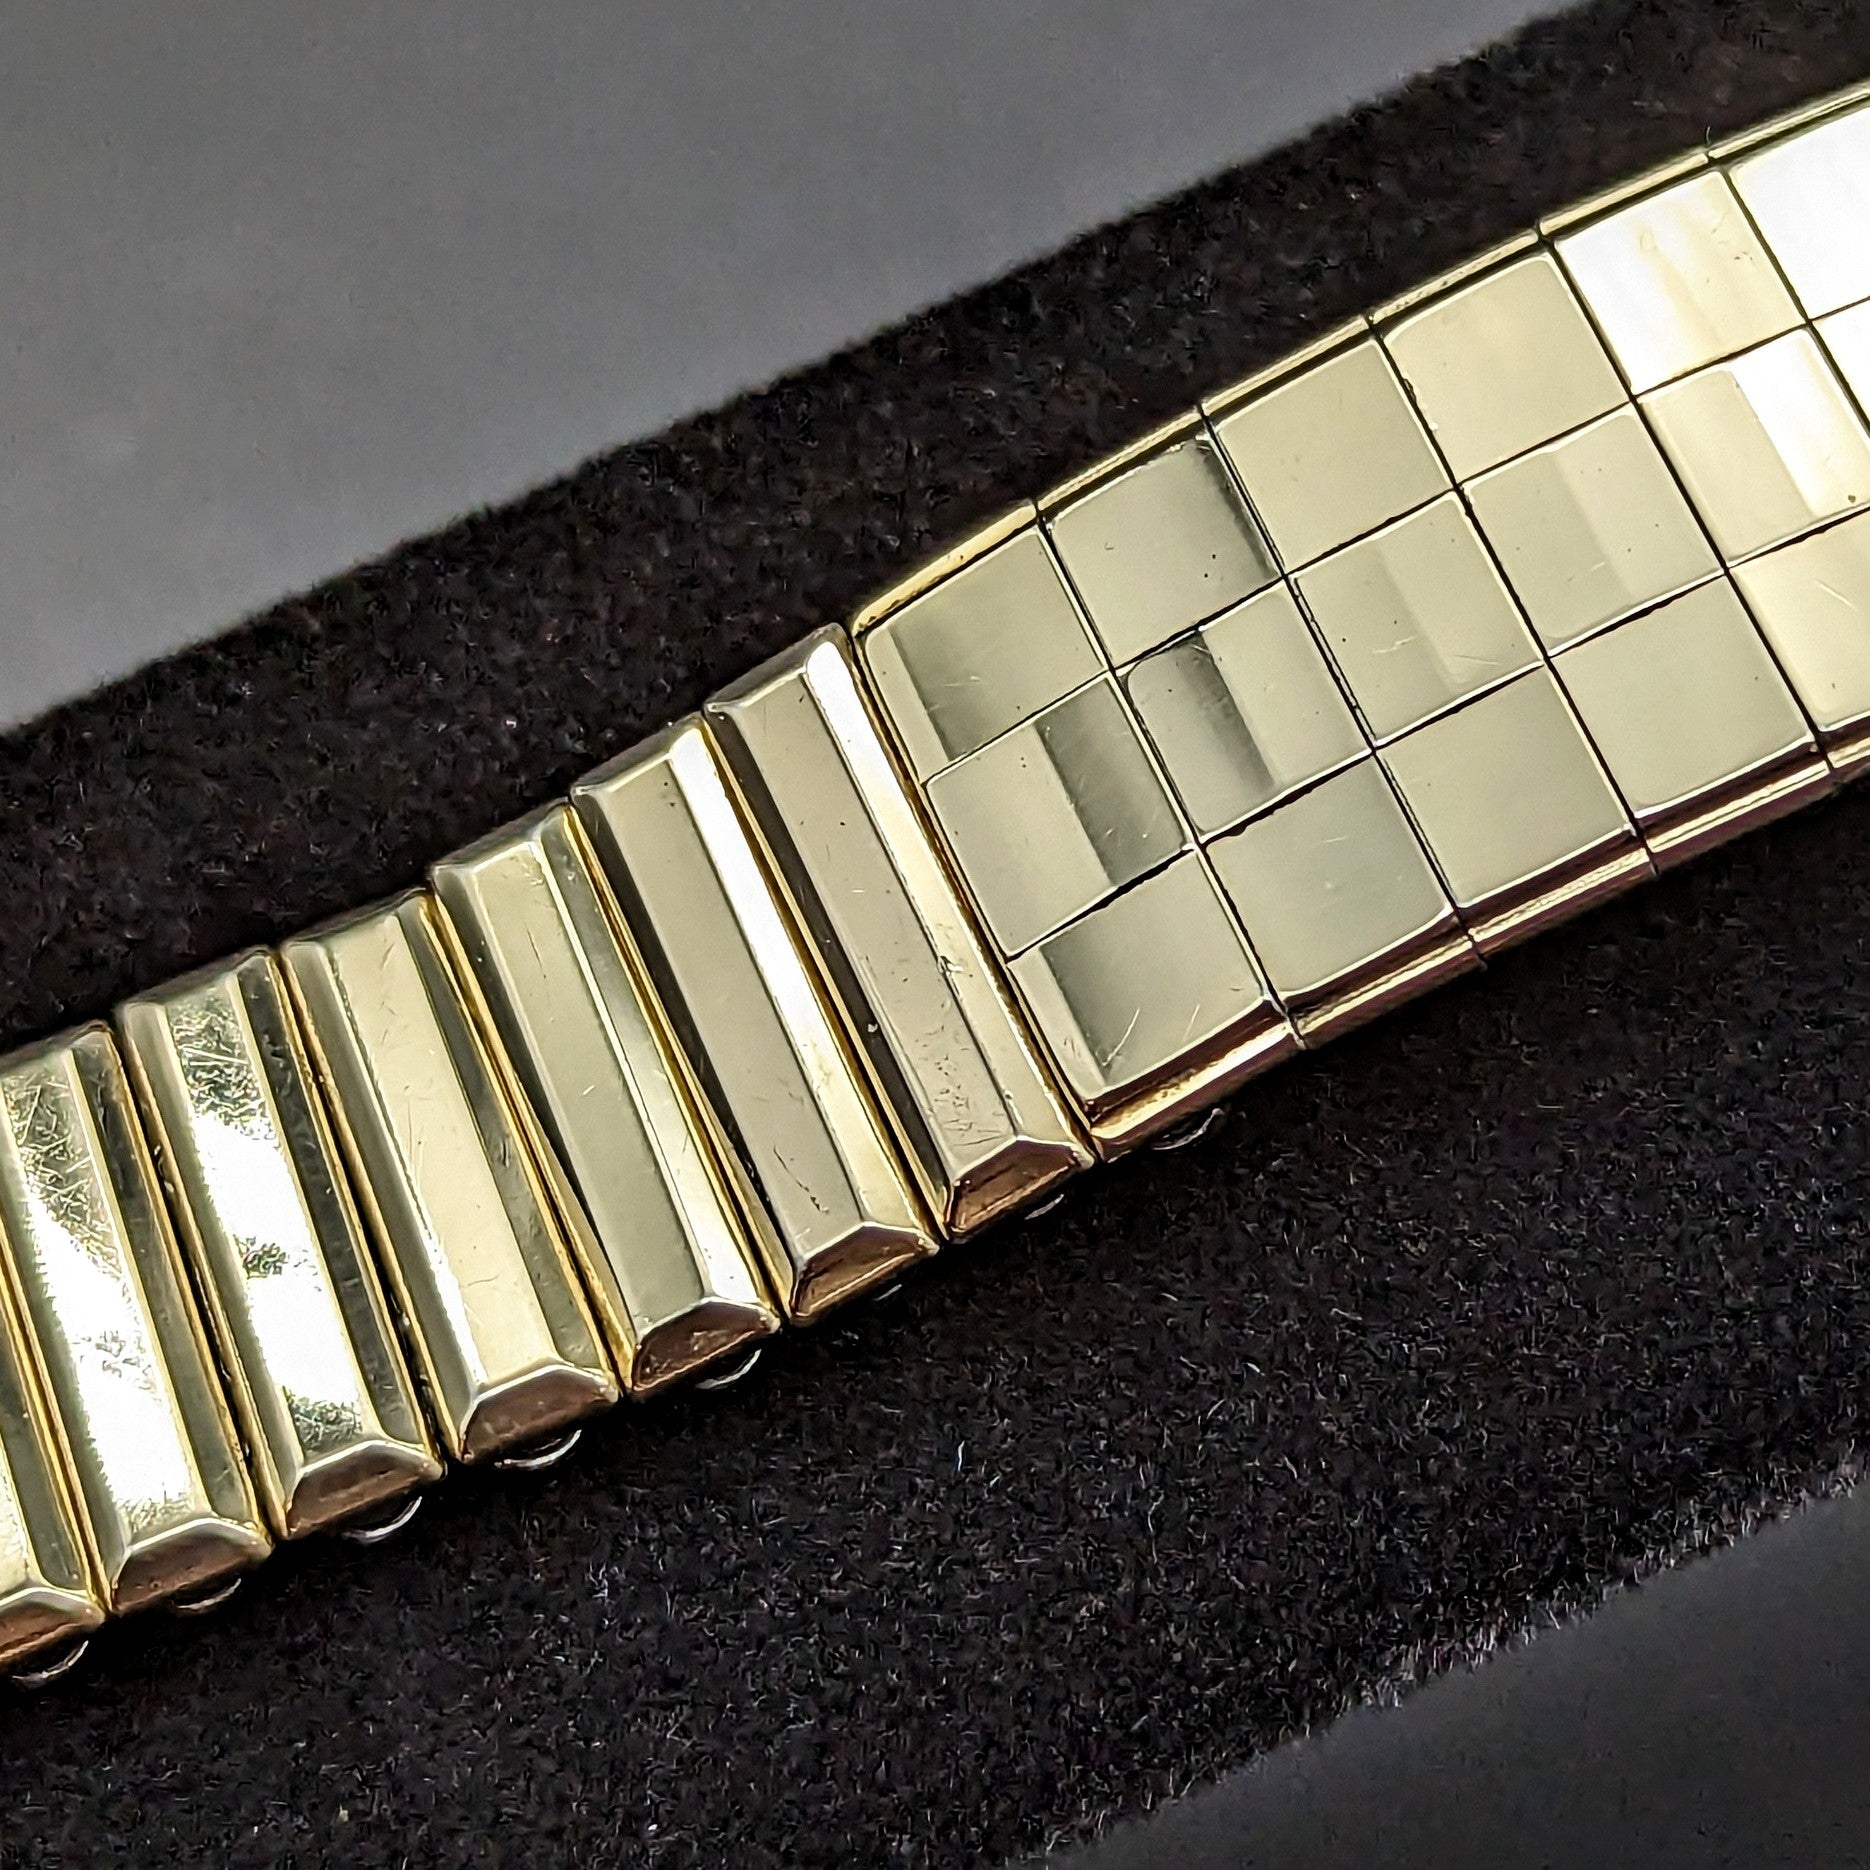 Rare KREISLER 17.5mm Watchband Center Scissor Expansion Vintage Bracelet